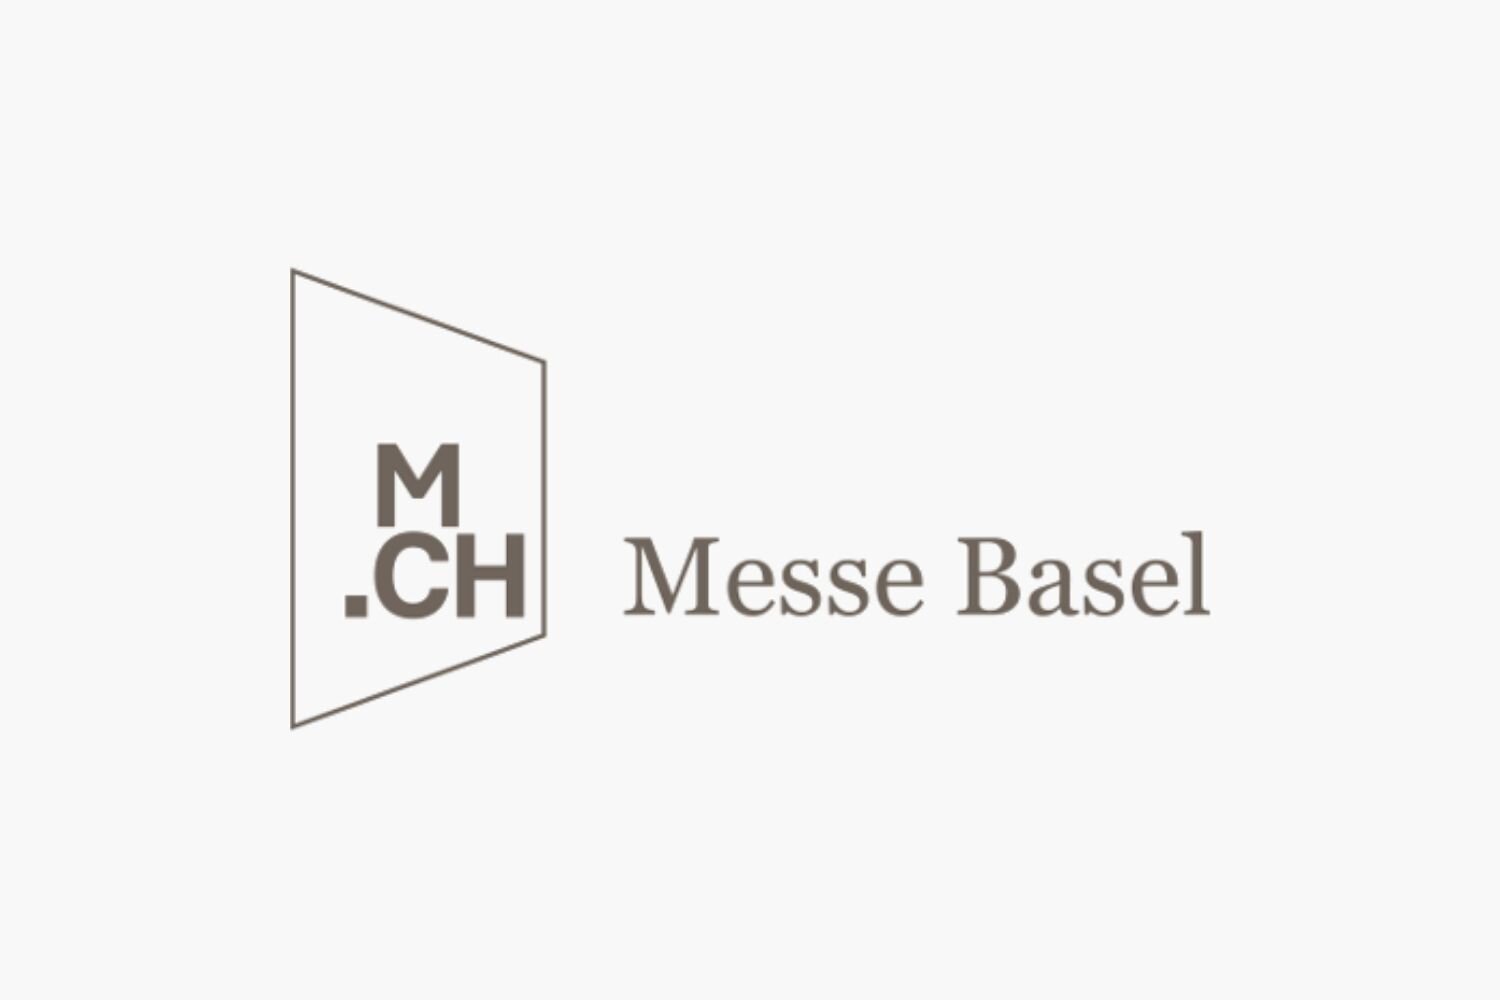 MCH Messe Basel.jpg